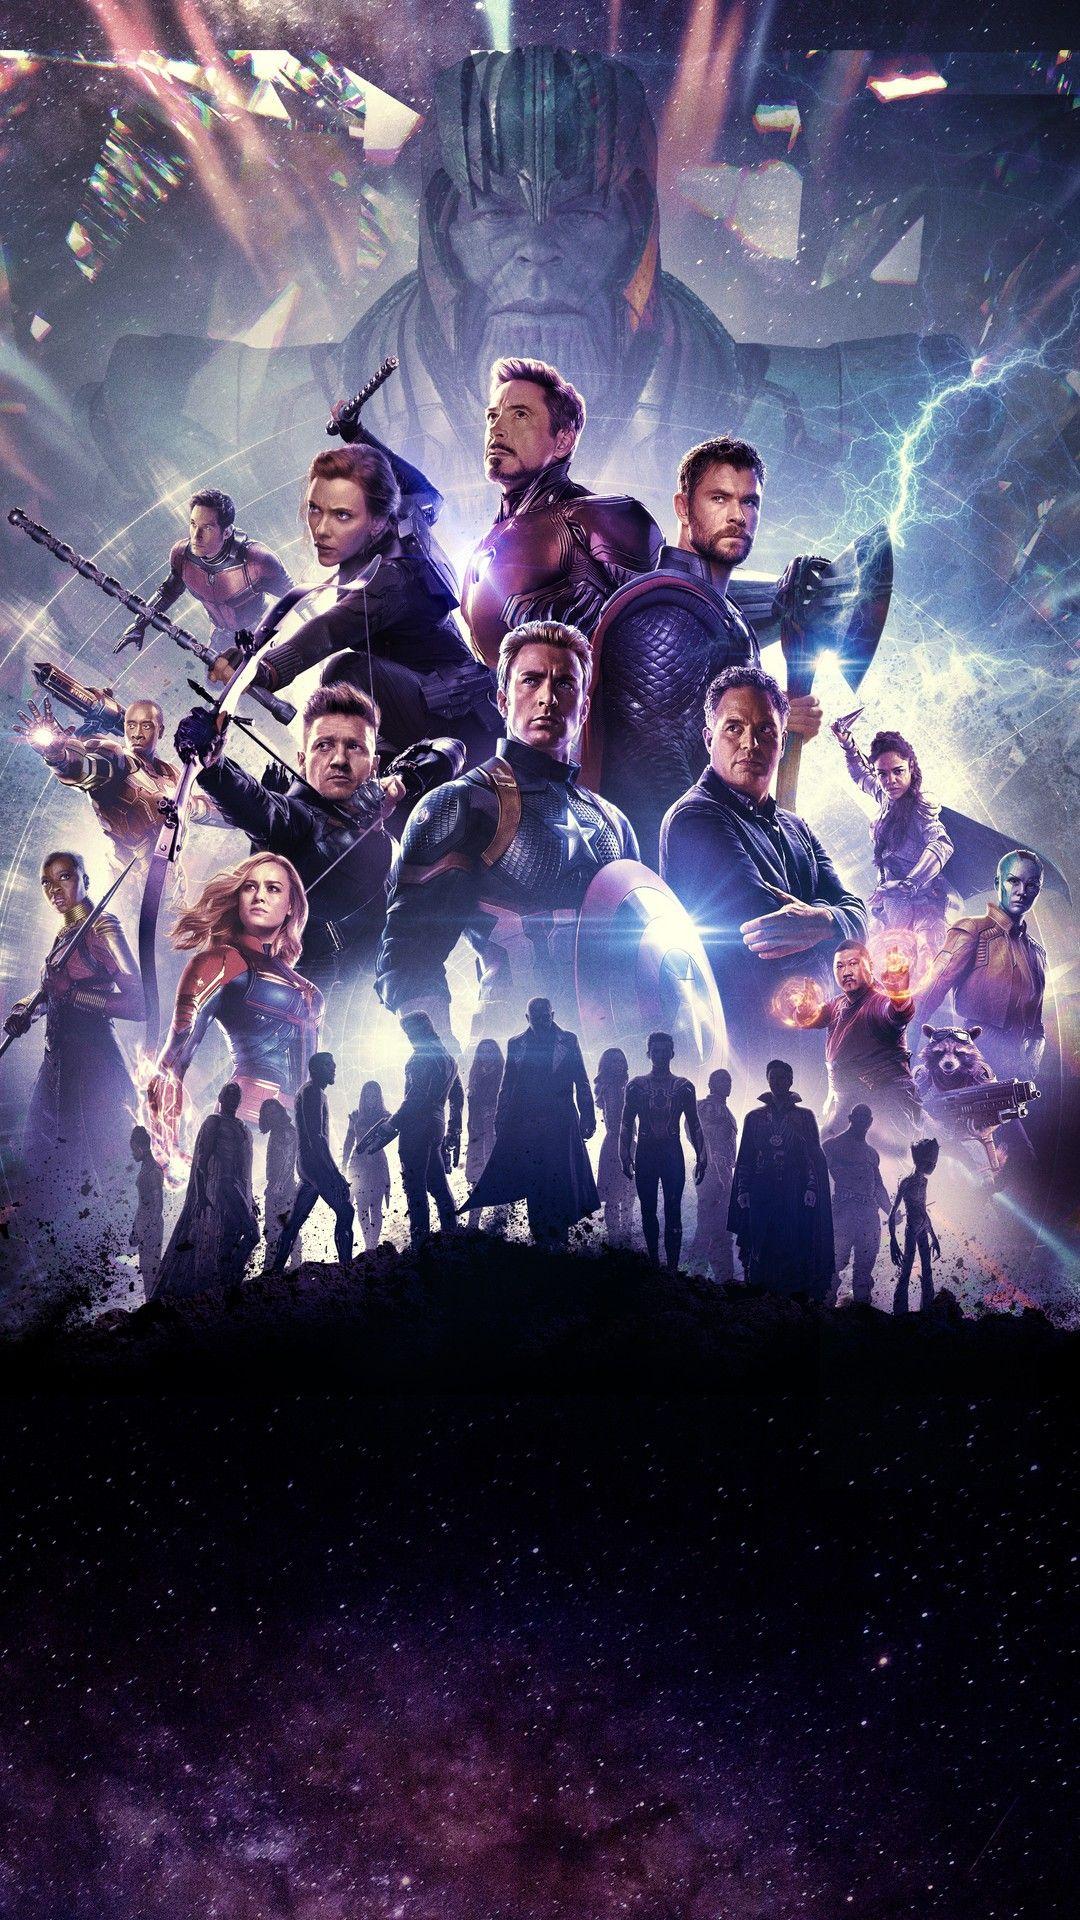 Avengers Endgame 2019 Android Wallpaper Movie Poster Wallpaper HD. Marvel background, Marvel posters, Marvel superheroes